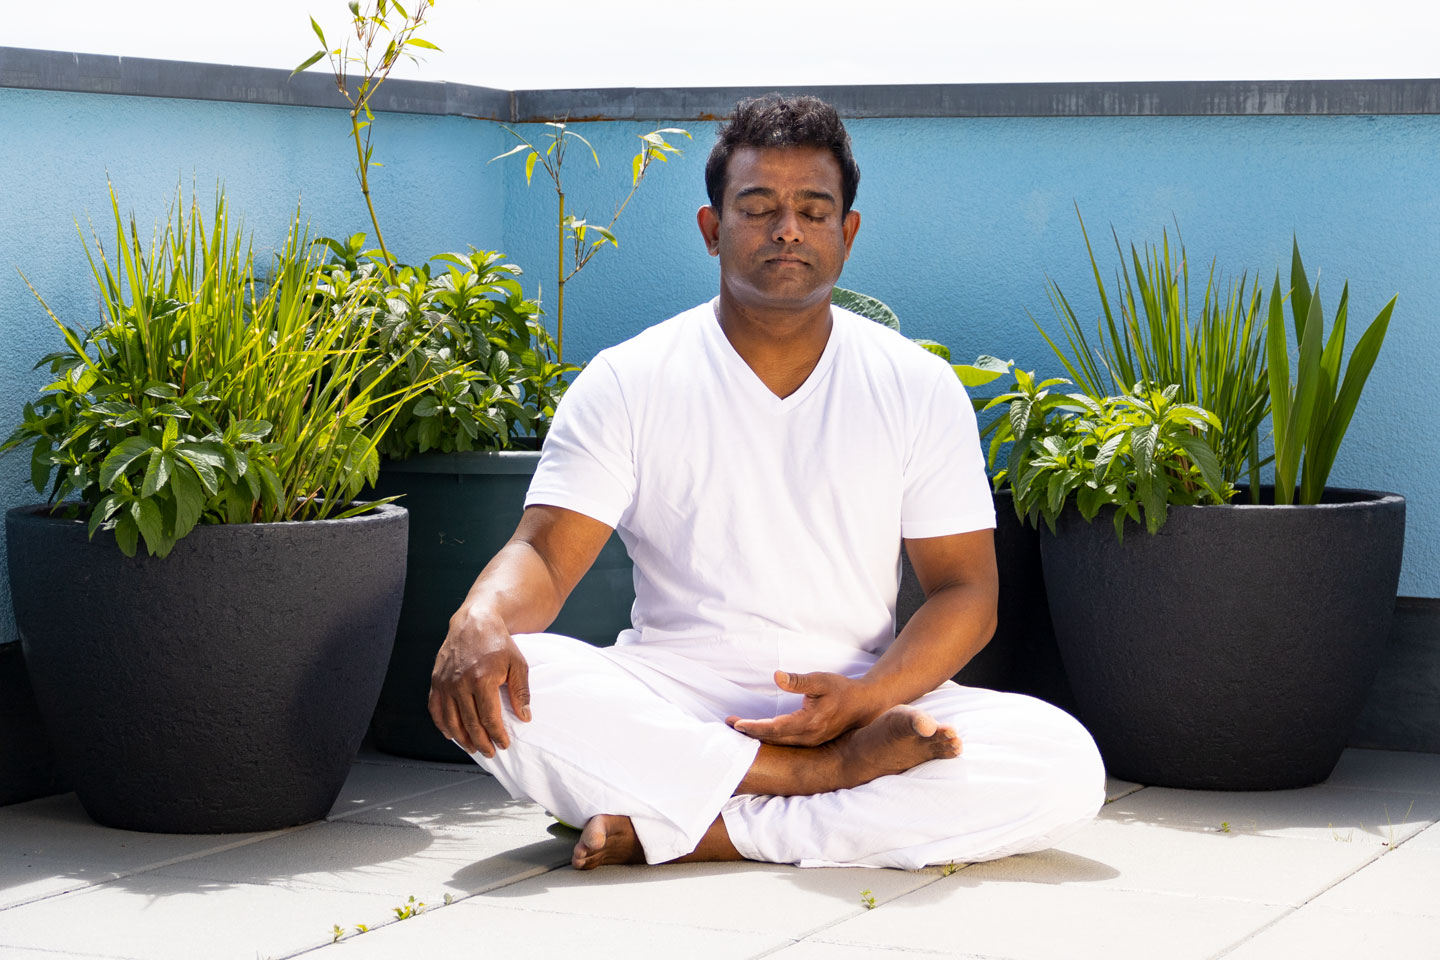 Bild: Yoga Ganzkörper Balance: Pragash Irudayam in Meditation